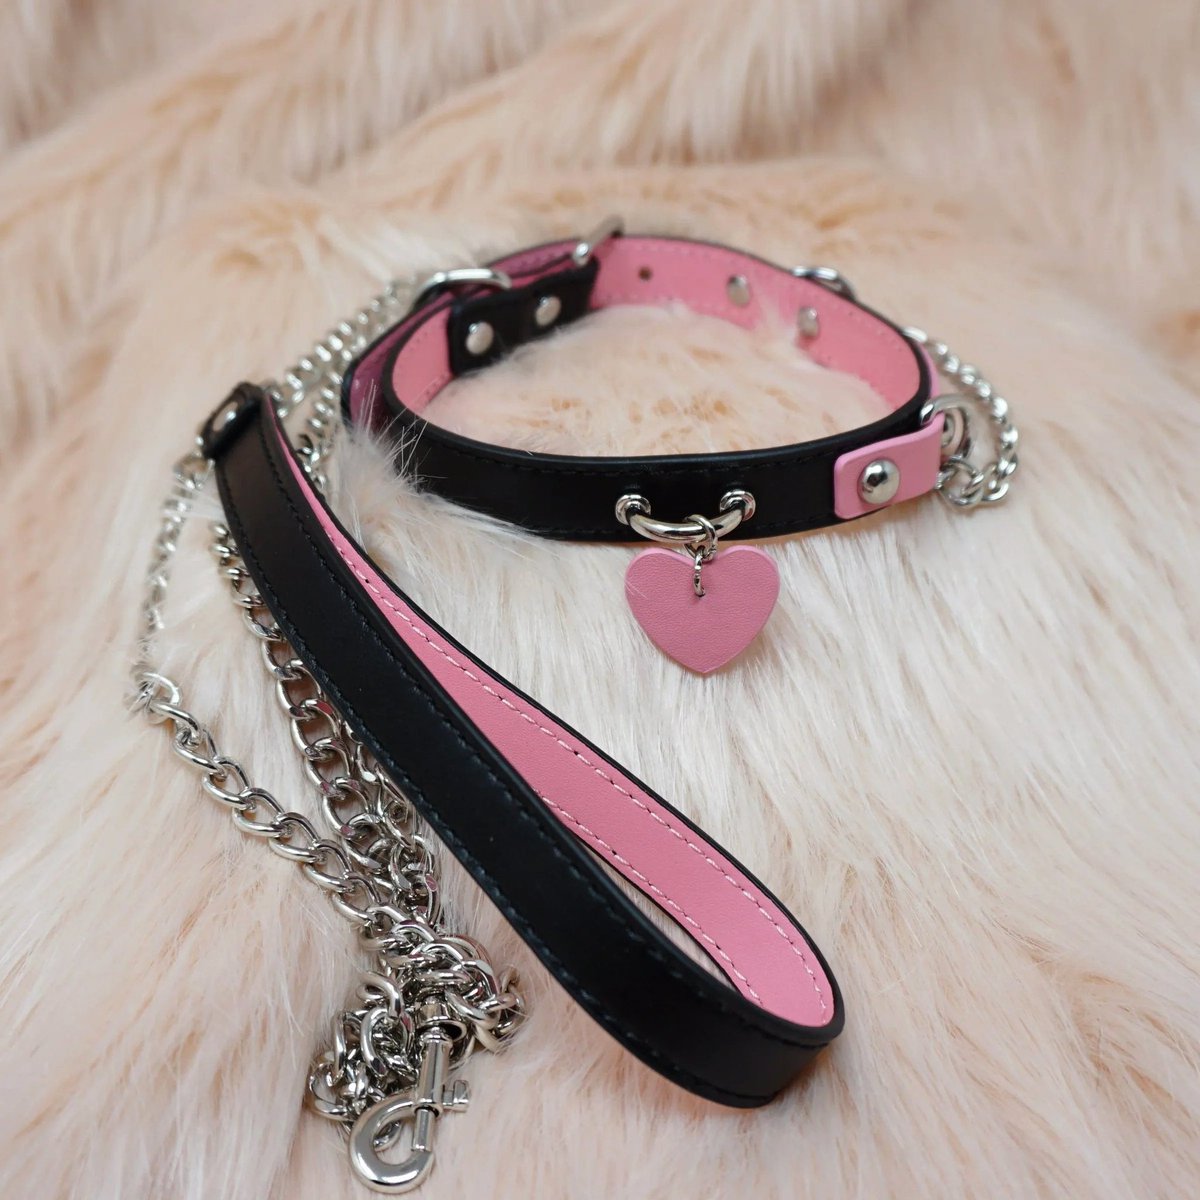 New pink & black collar design 🖤